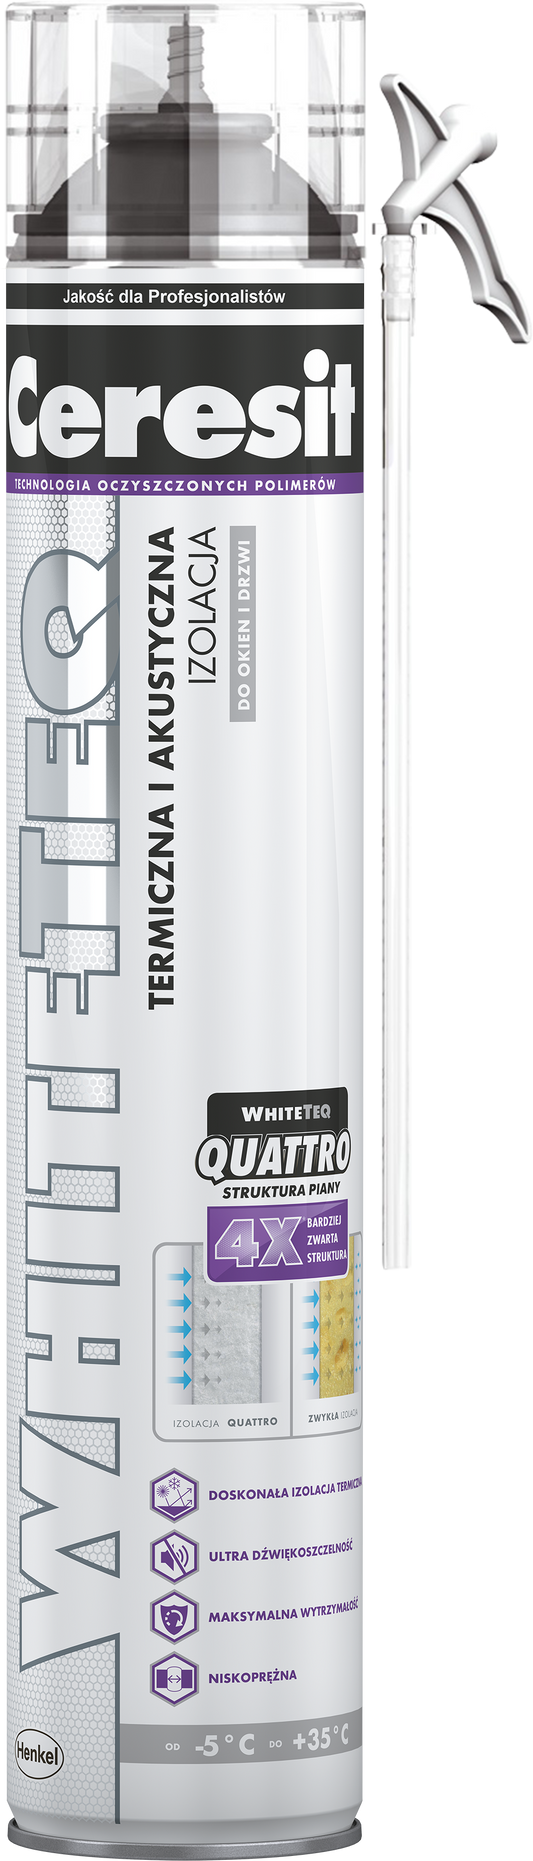 Ceresit piana WhiteTeQ Quattro wężykowa